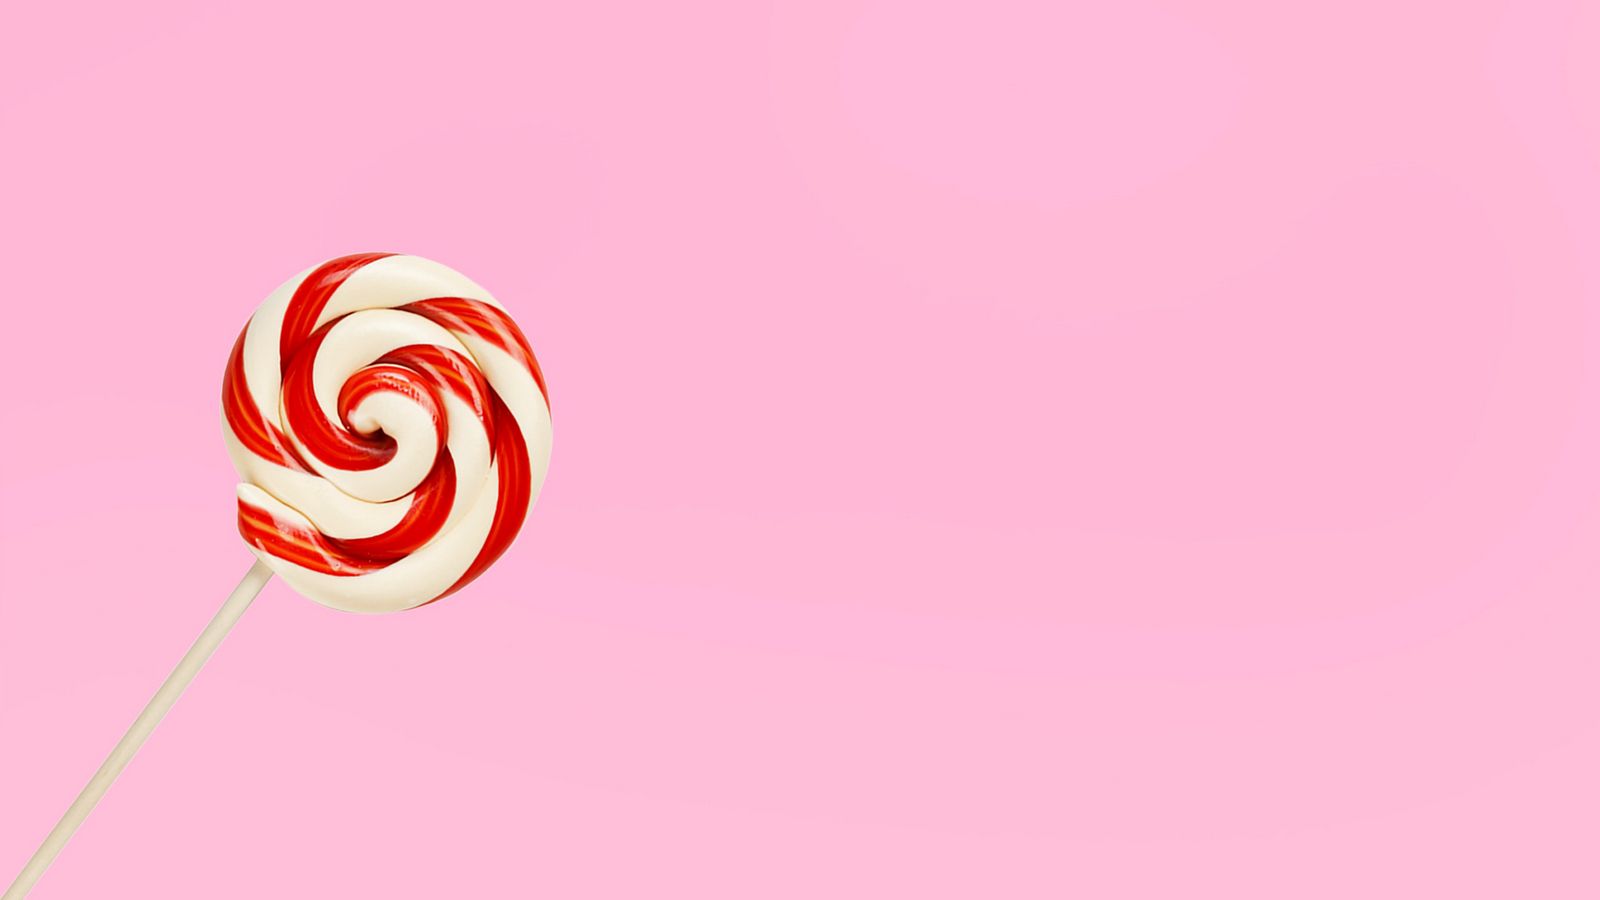 Download wallpaper x lollipop minimalism sweet widescreen hd background